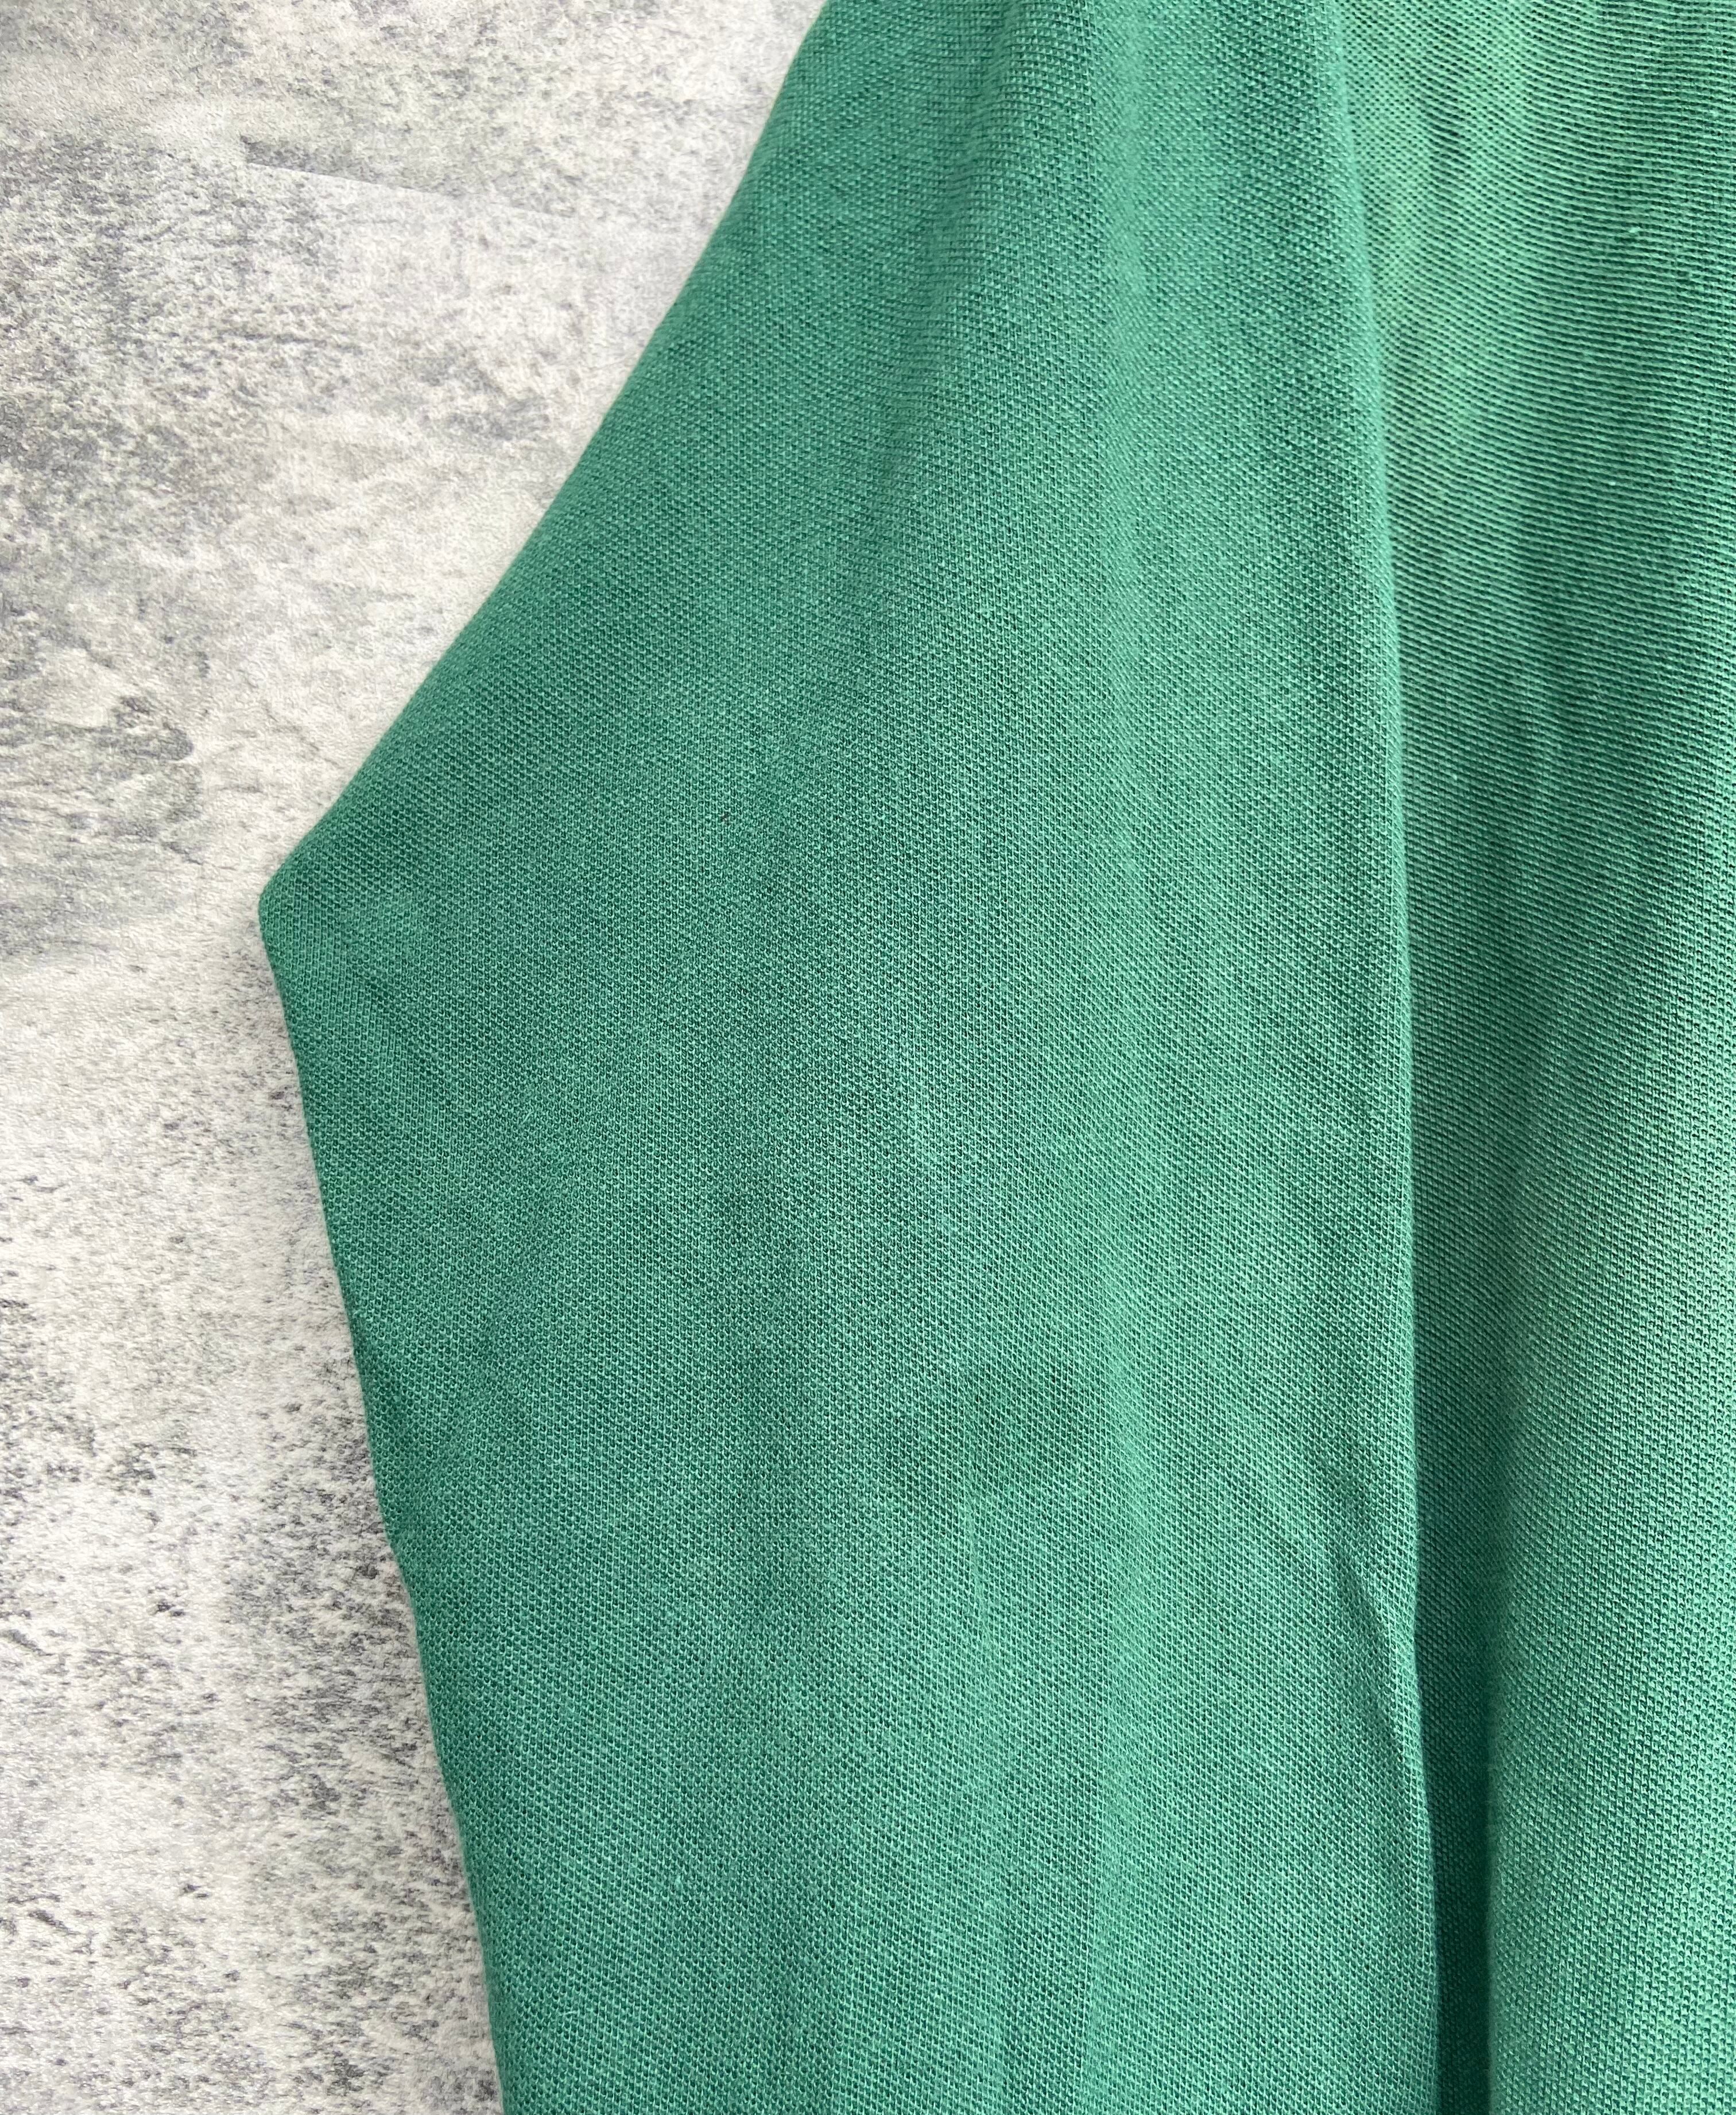 USA製ラルフローレン大判チェック柄ニットジャカード刺繍ラガーシャツ L 赤緑紺